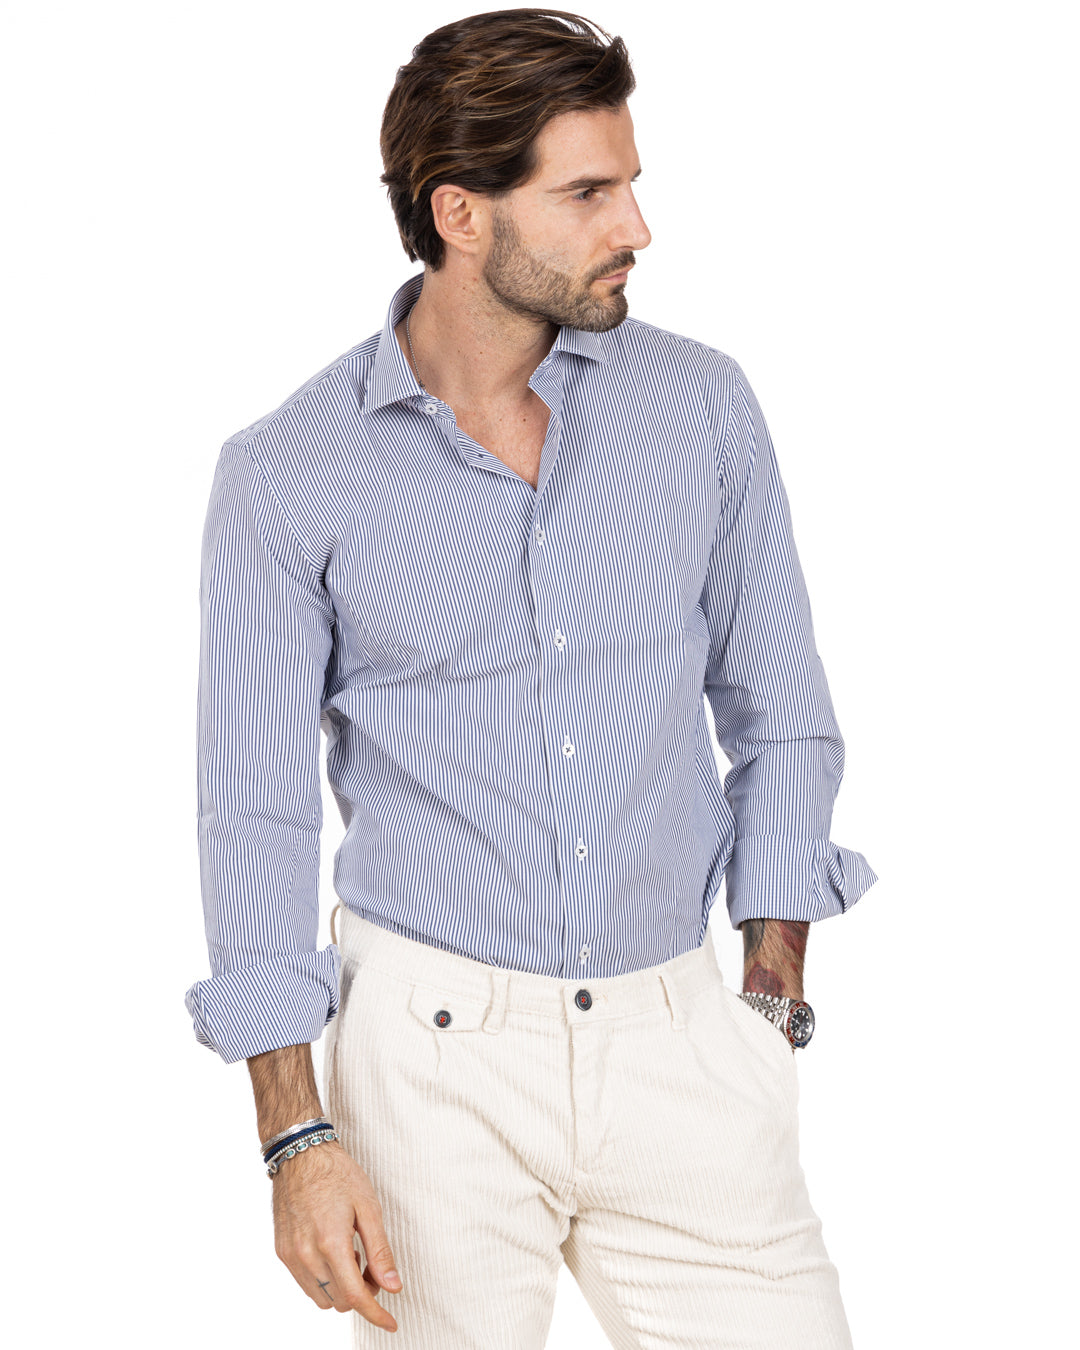 Camicia - basic classica riga stretta azzurra in cotone